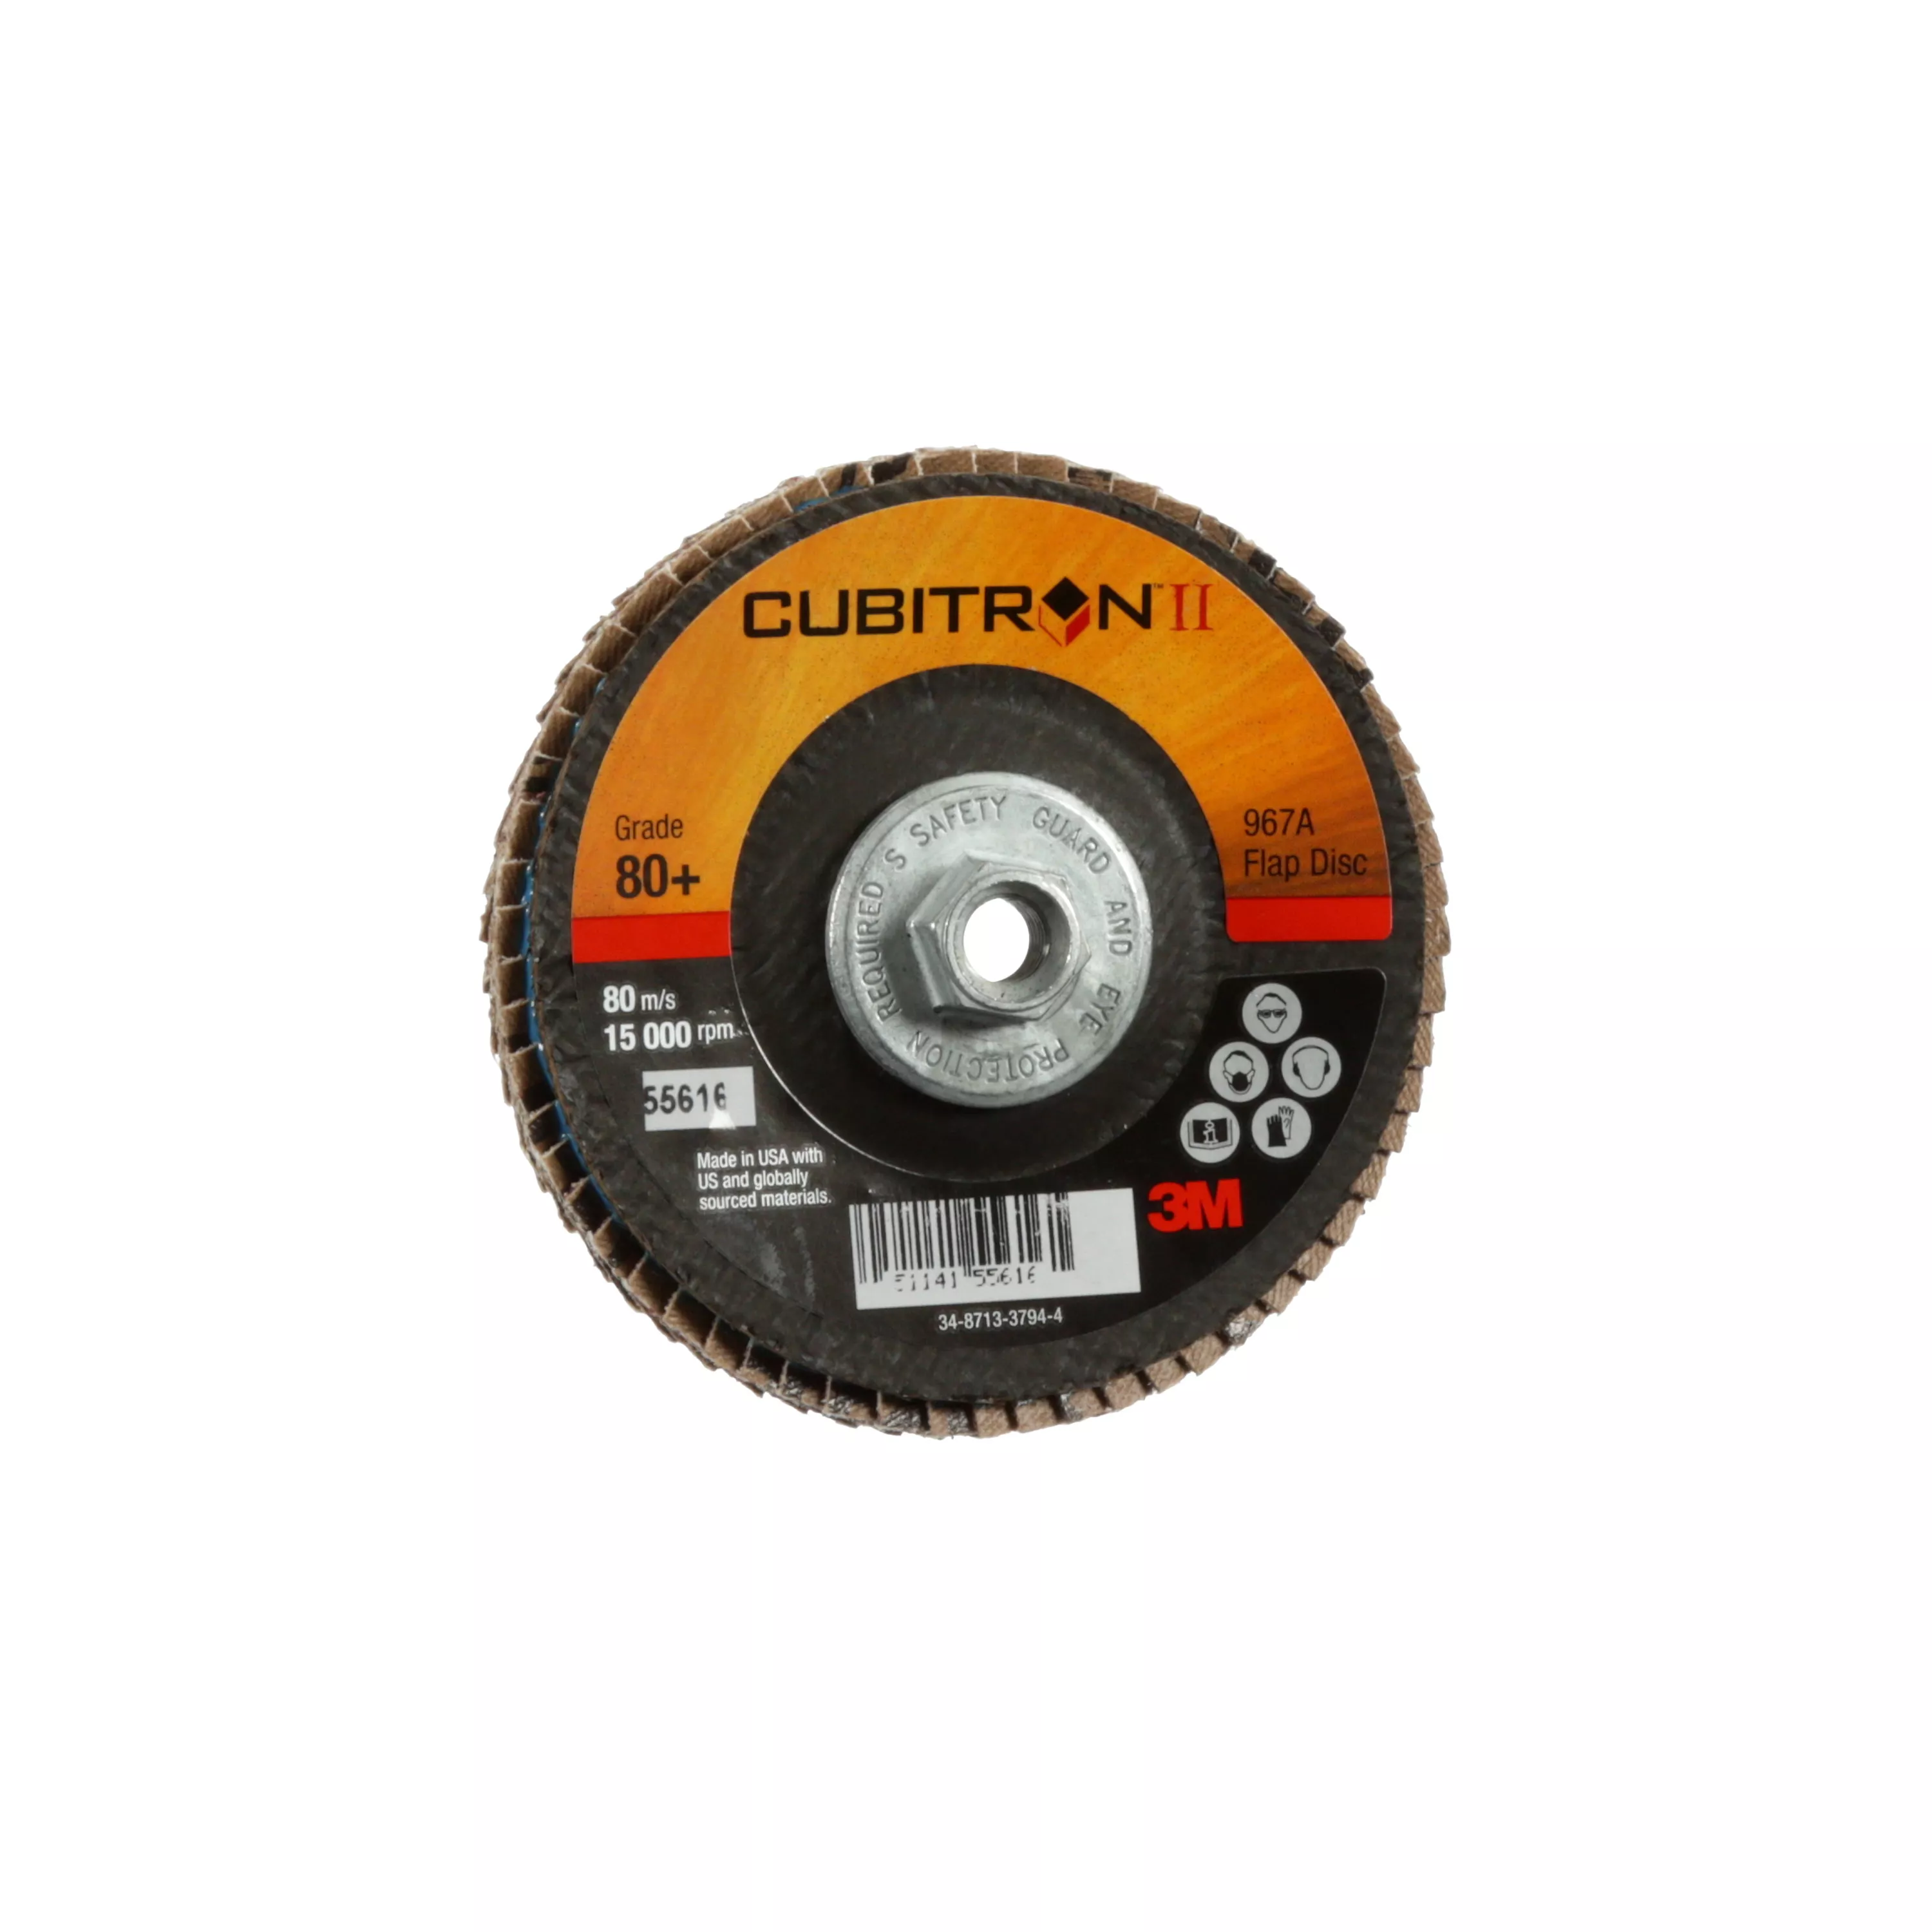 3M™ Cubitron™ II Flap Disc 967A, 80+, T29 Quick Change, 4 in x 3/8